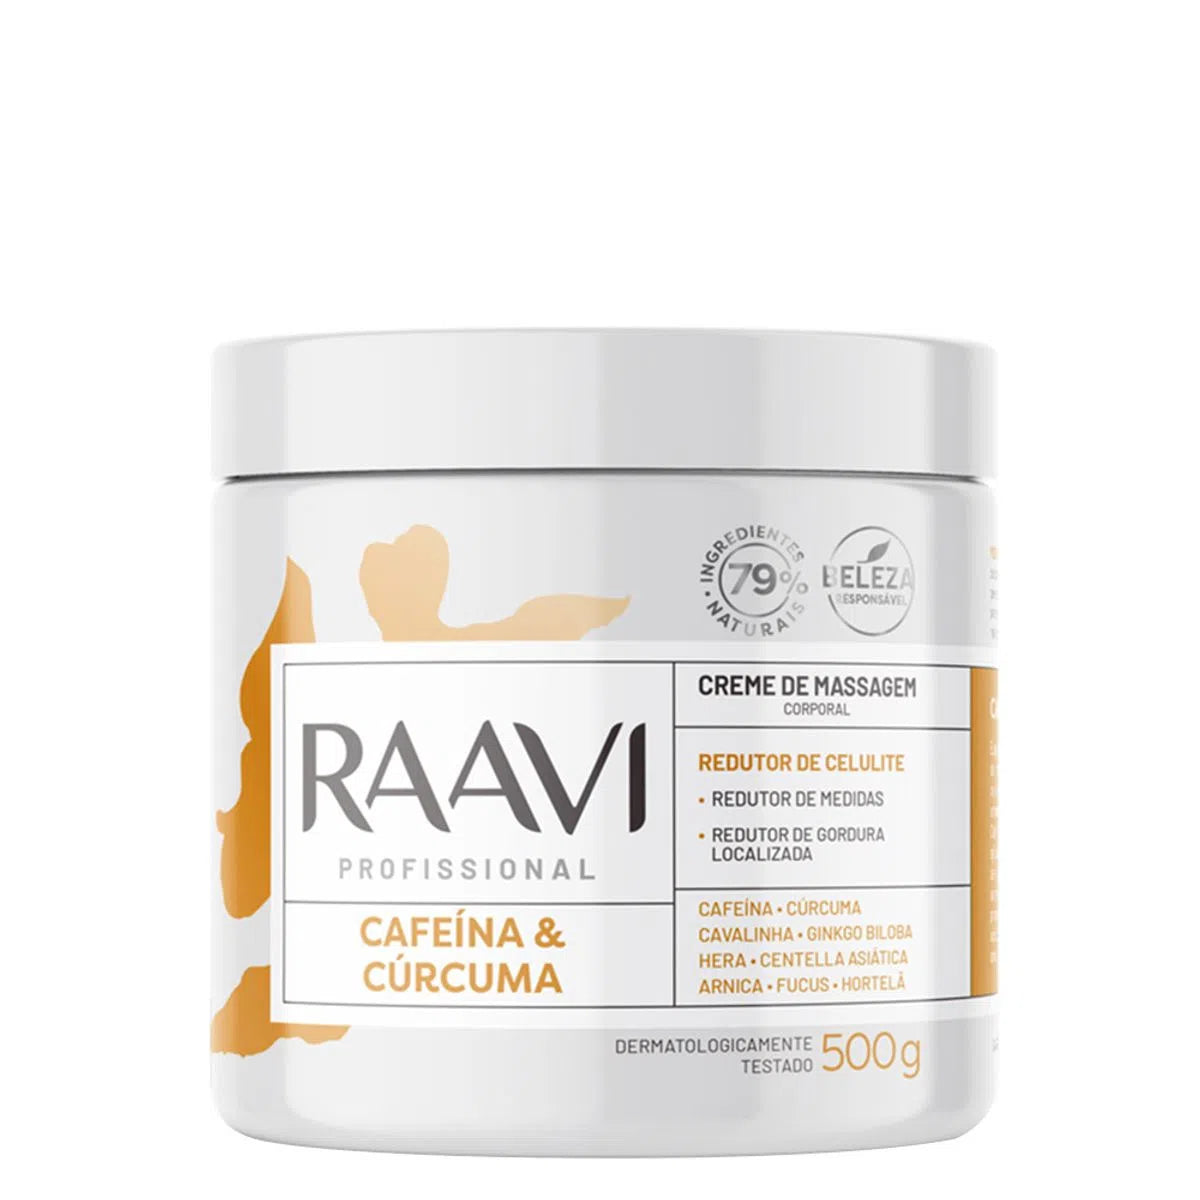 Crème de massage corporel de la caféine et du curcuma Raavi 500g